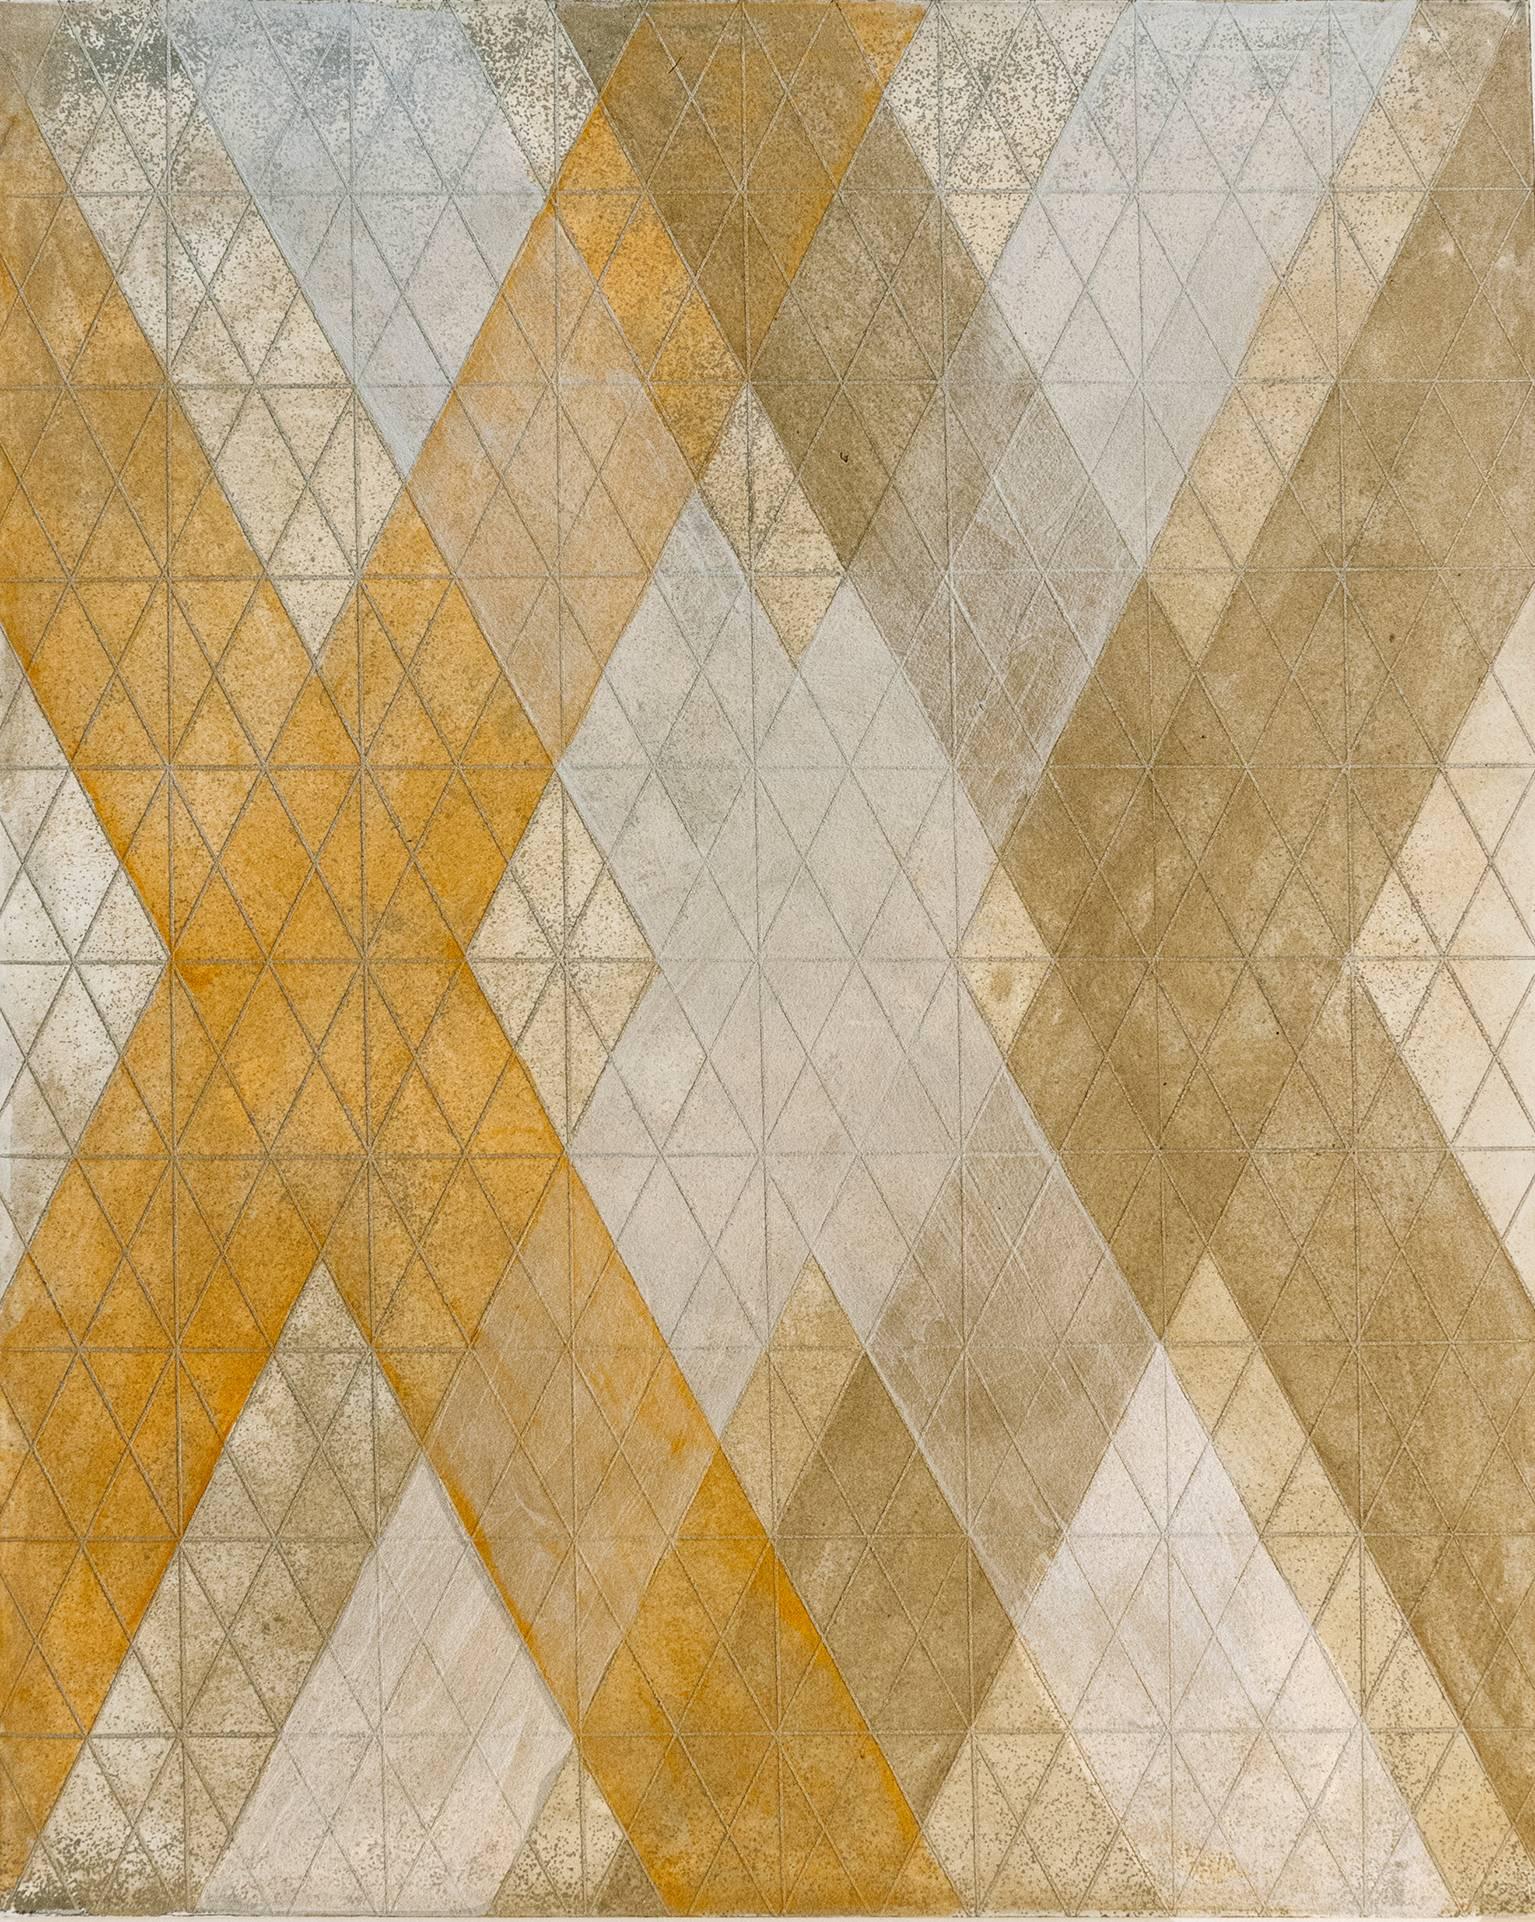 Arlene Slavin Abstract Print - "Intersection/Cosmos Six", abstract geometric print, gold, orange, silver grid.